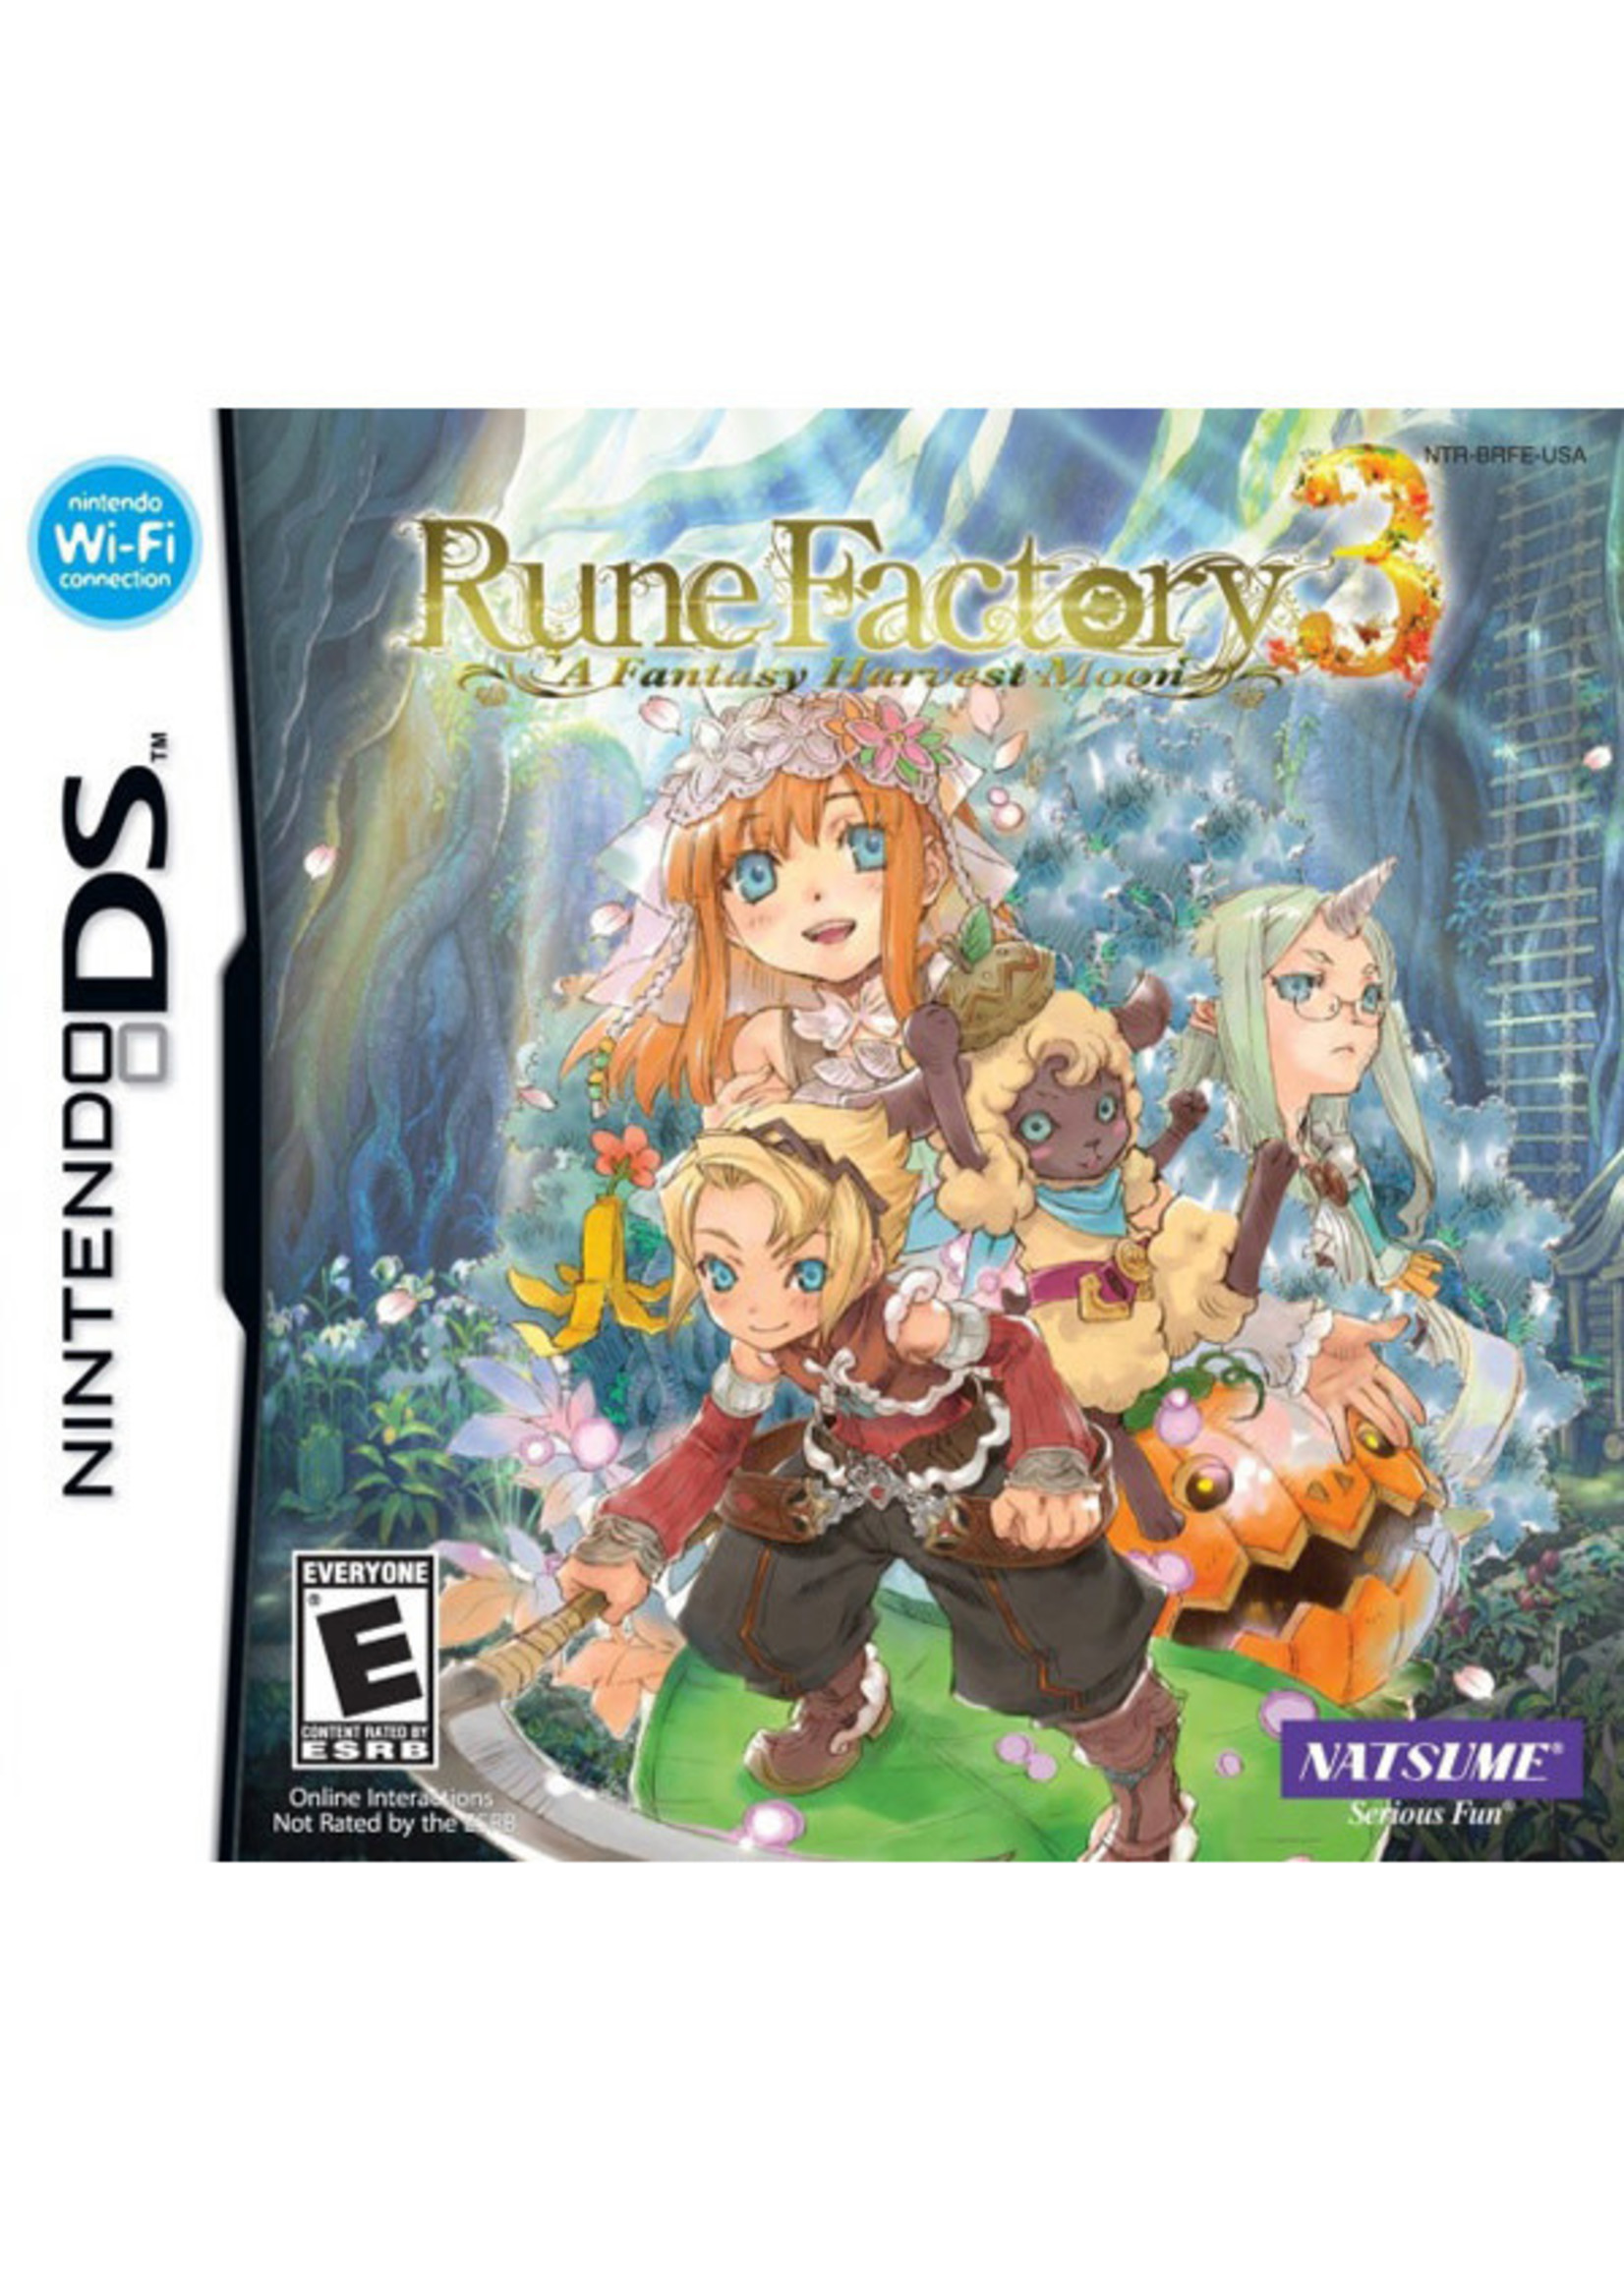 Rune Factory 3 A Fantasy Harvest Moon DS (CIB)